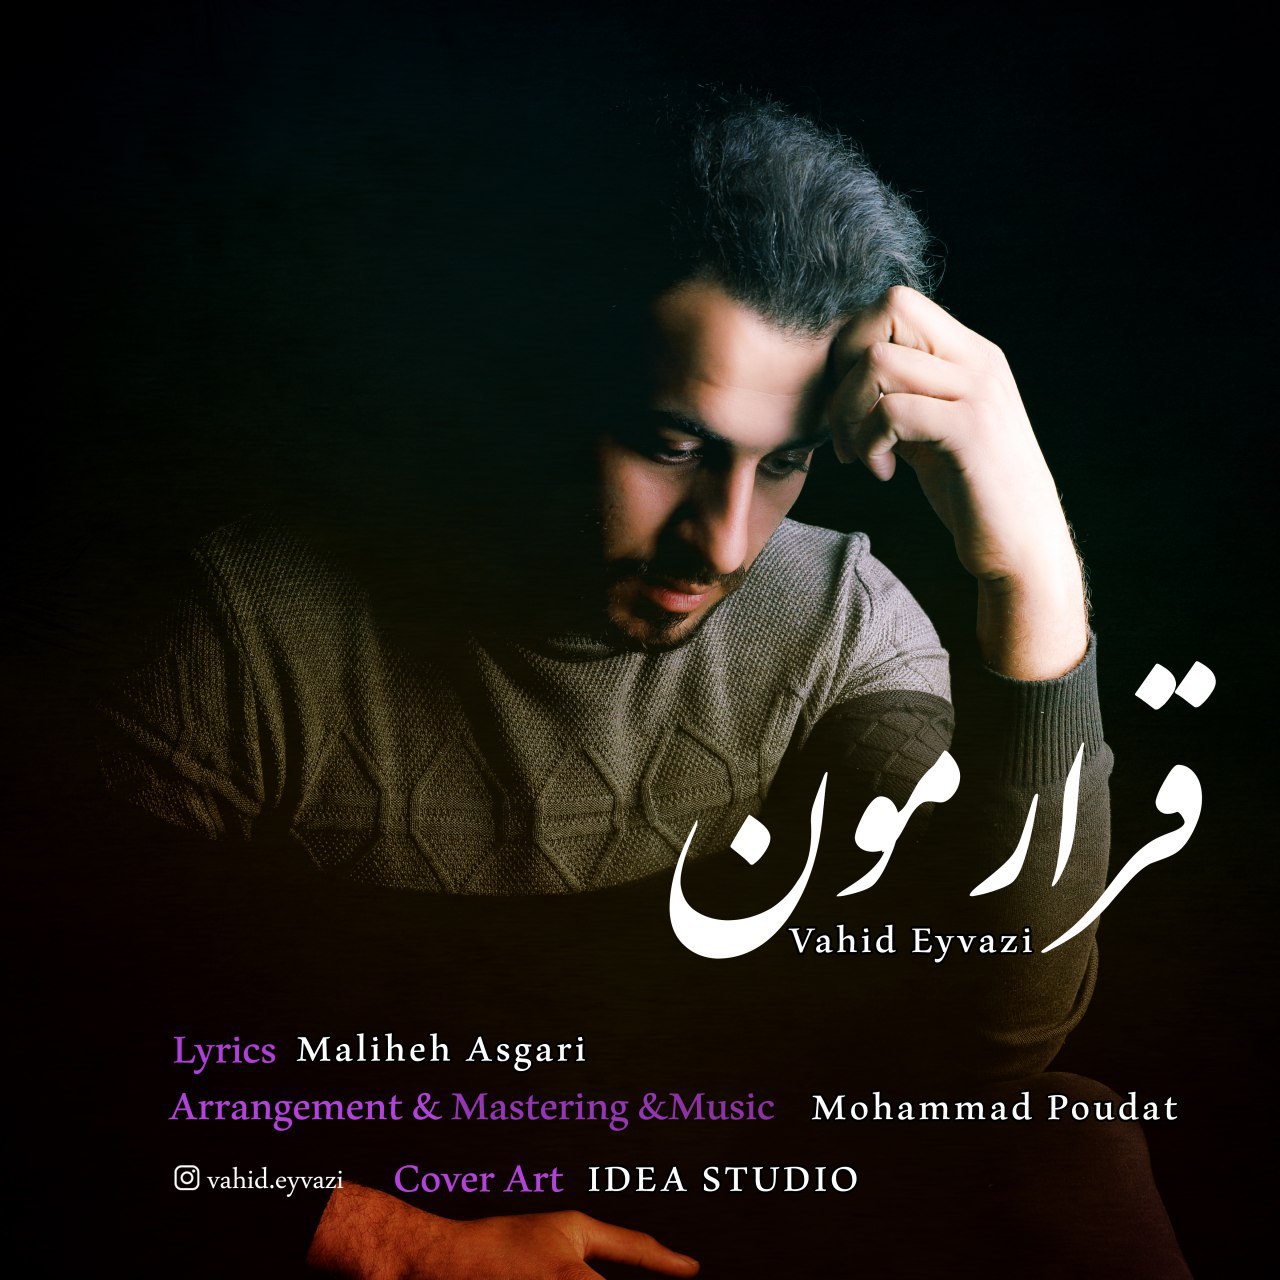  دانلود آهنگ جدید وحید عیوضی - قرارمون | Download New Music By Vahid Eyvazi - Ghararemoon